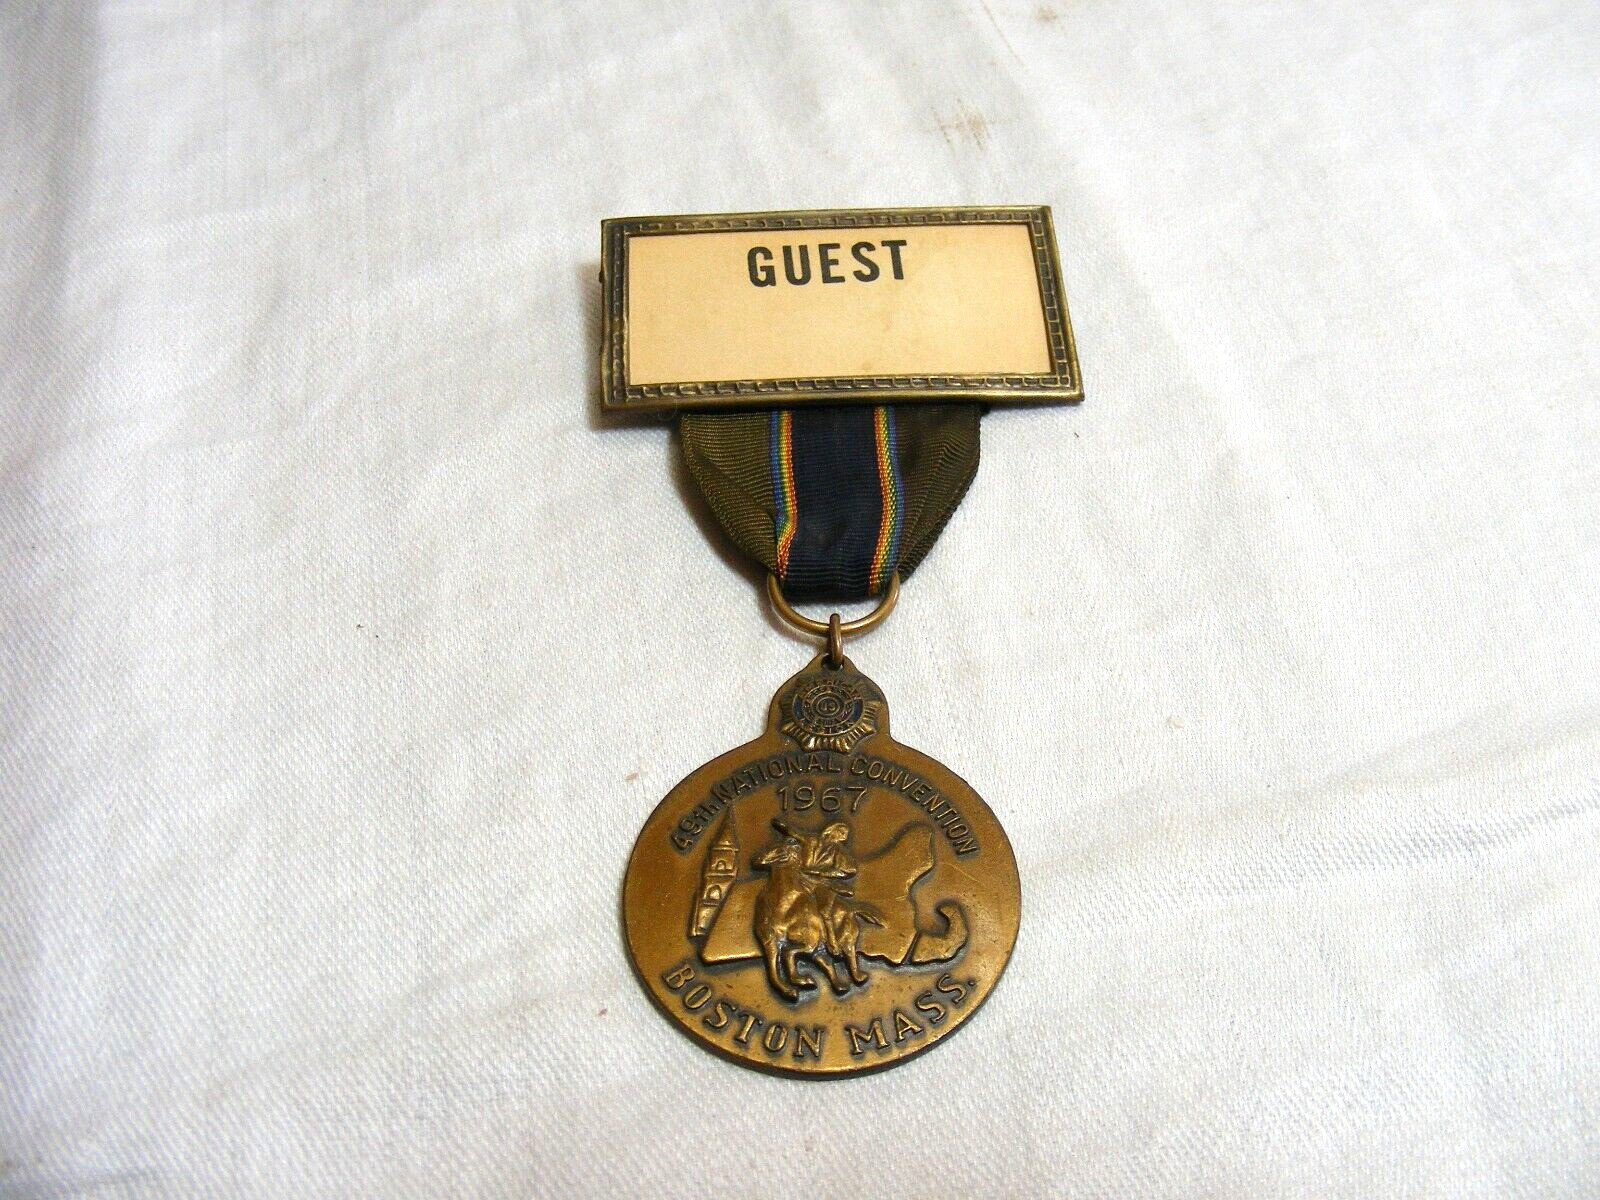 Vintage 1967 American Legion Convention Badge Pin Ribbon Medal 15-e